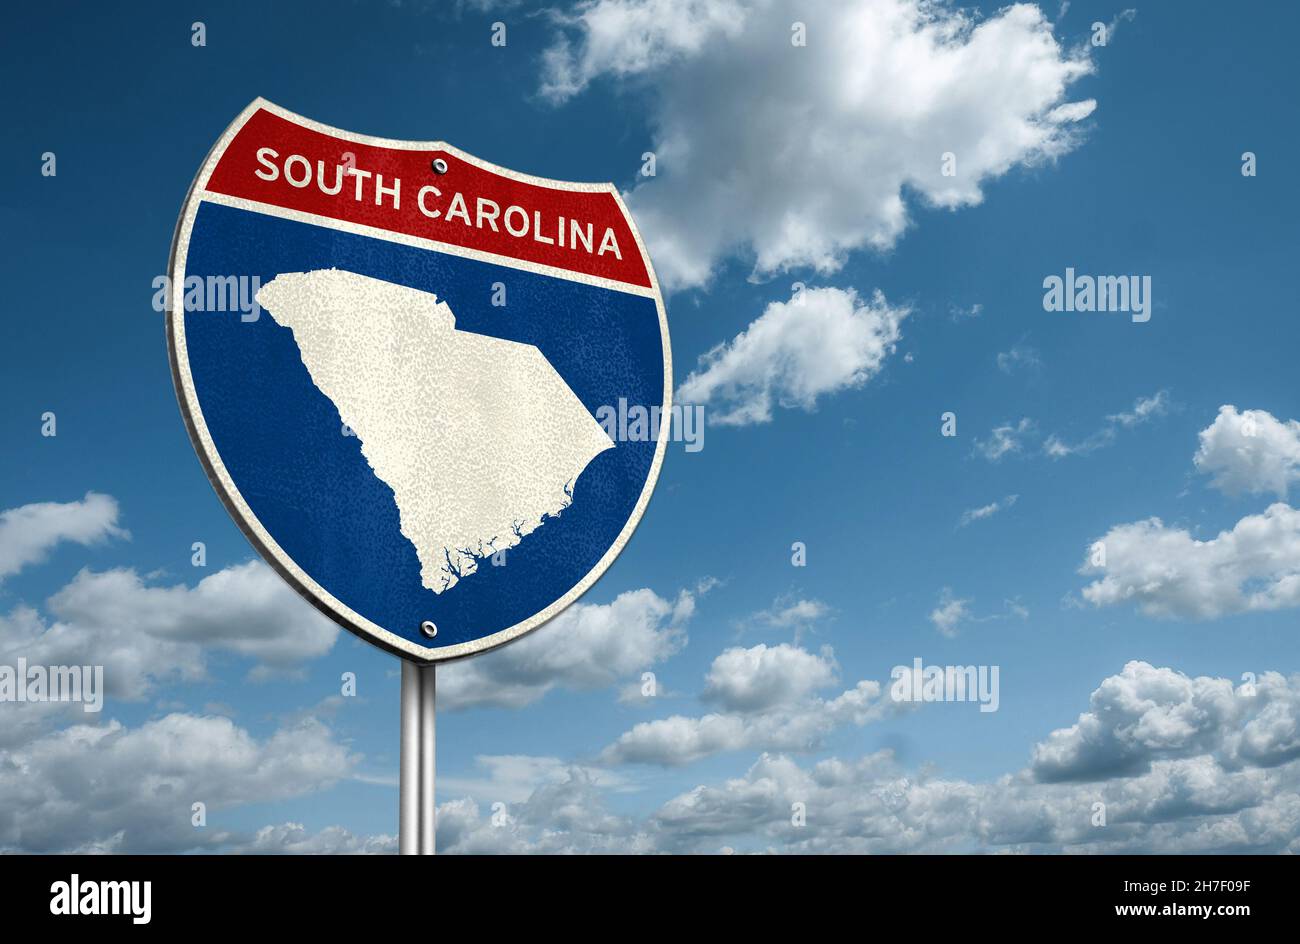 South Carolina - US State in the coastal Southeastern region of the United States Stock Photo